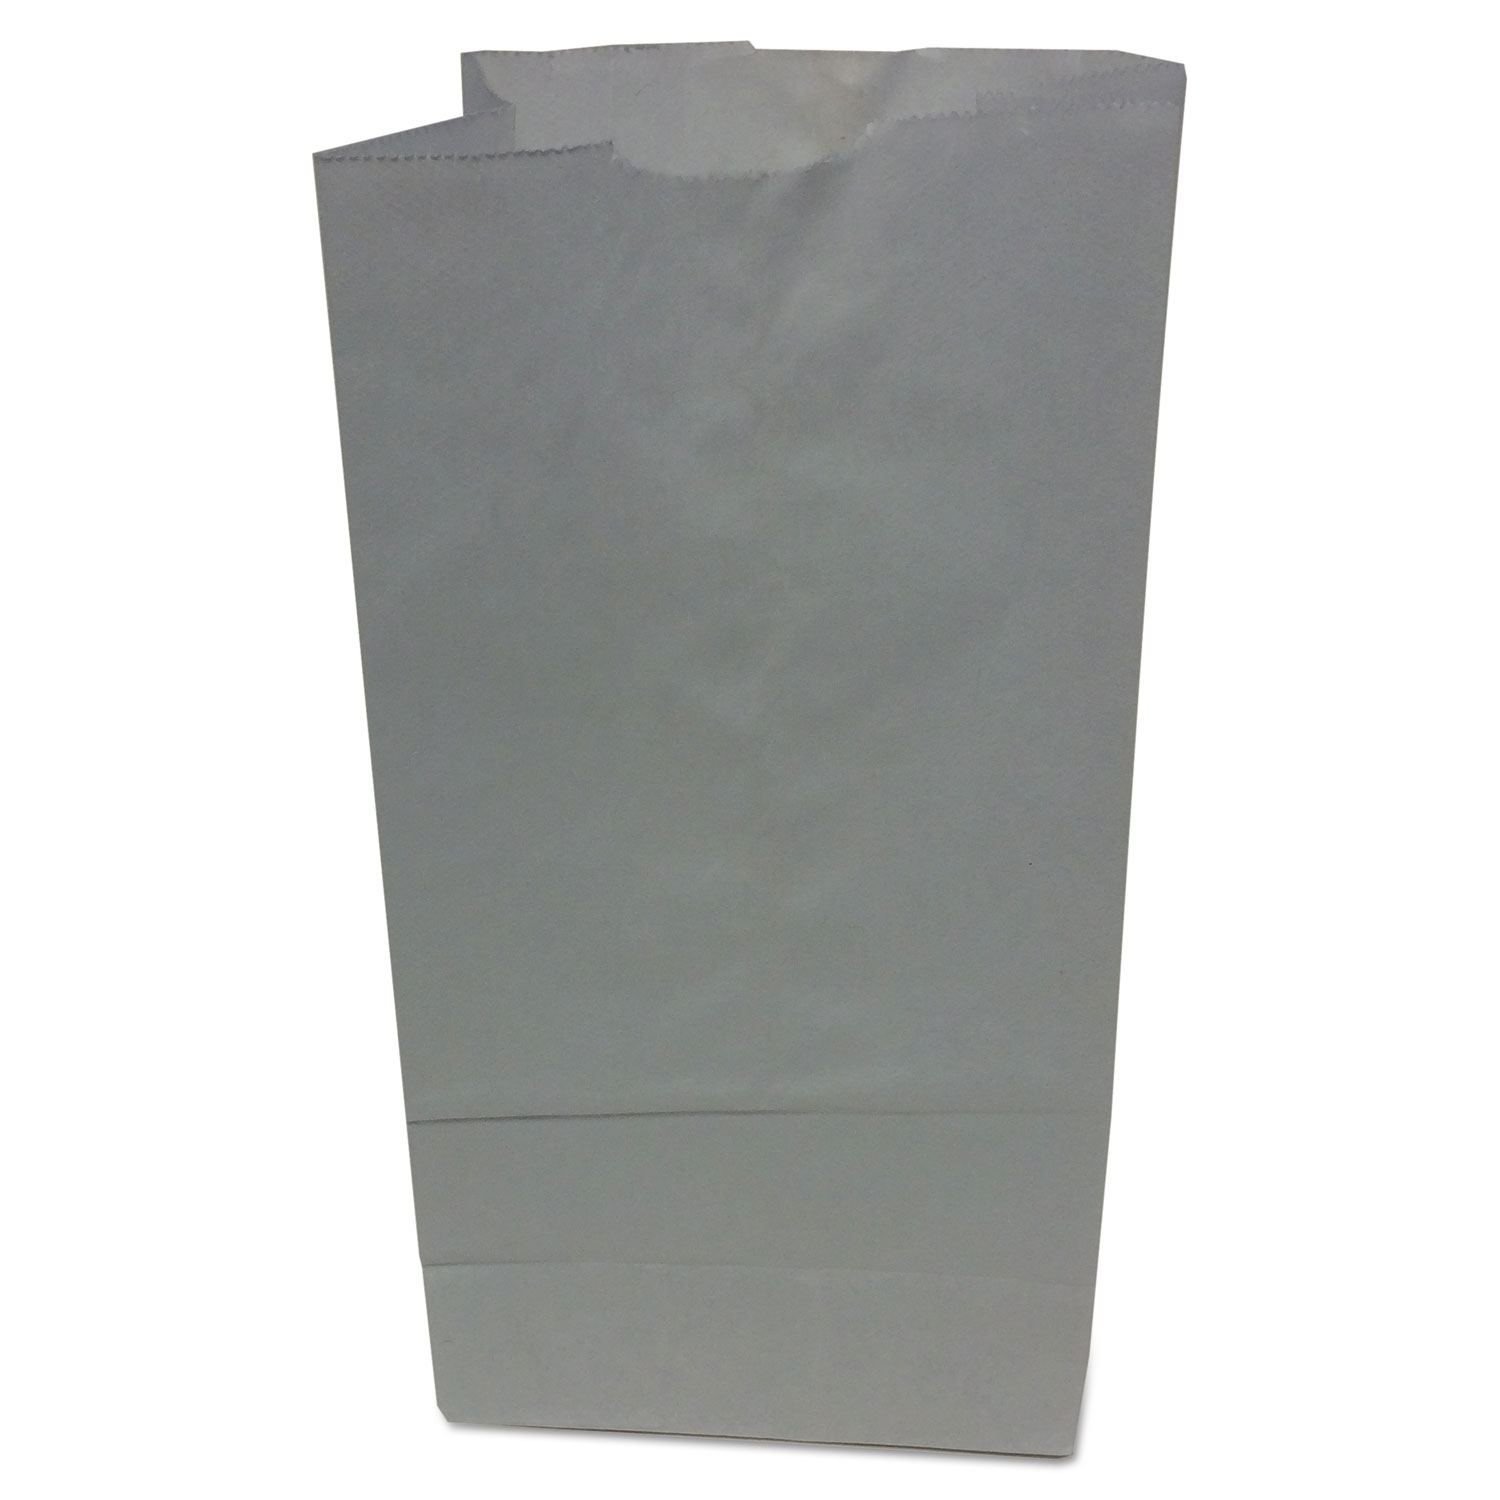 #5 Paper Grocery Bag, 35lb White, Standard 5 1/4 x 3 7/16 x 10 15/16, 500 bags